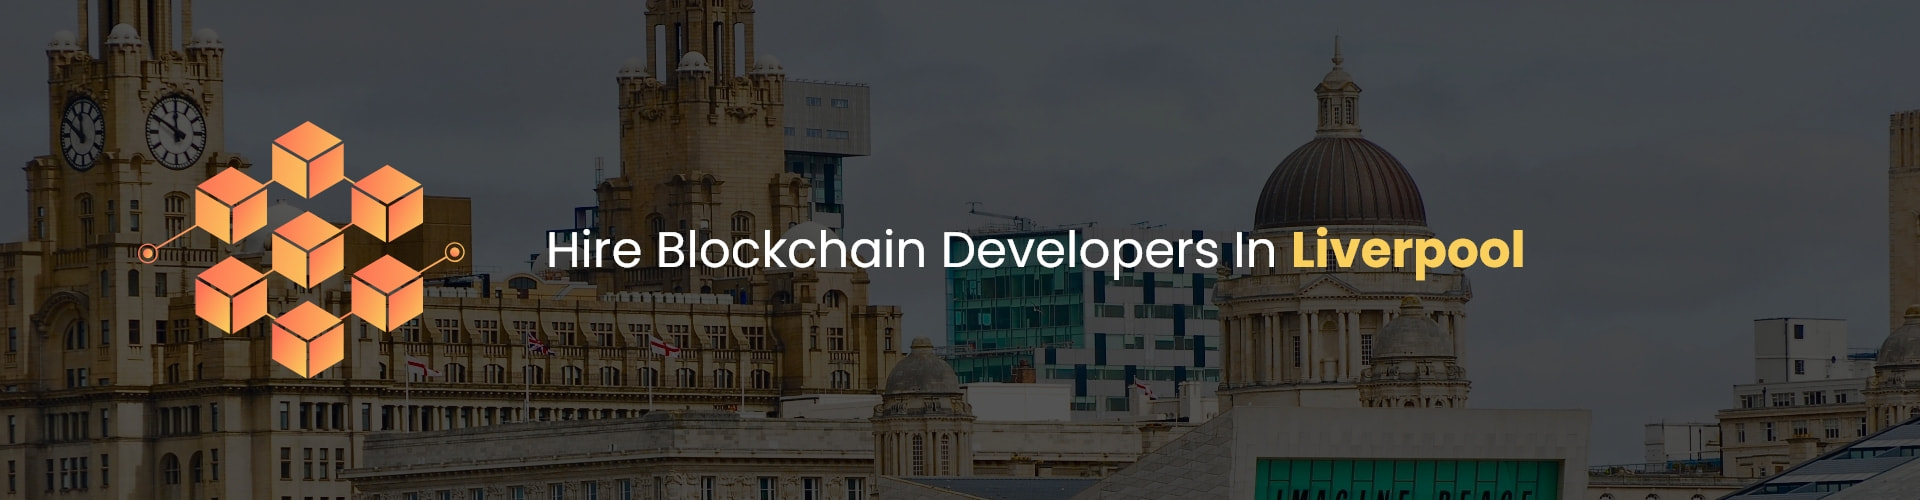 hire blockchain developers in liverpool